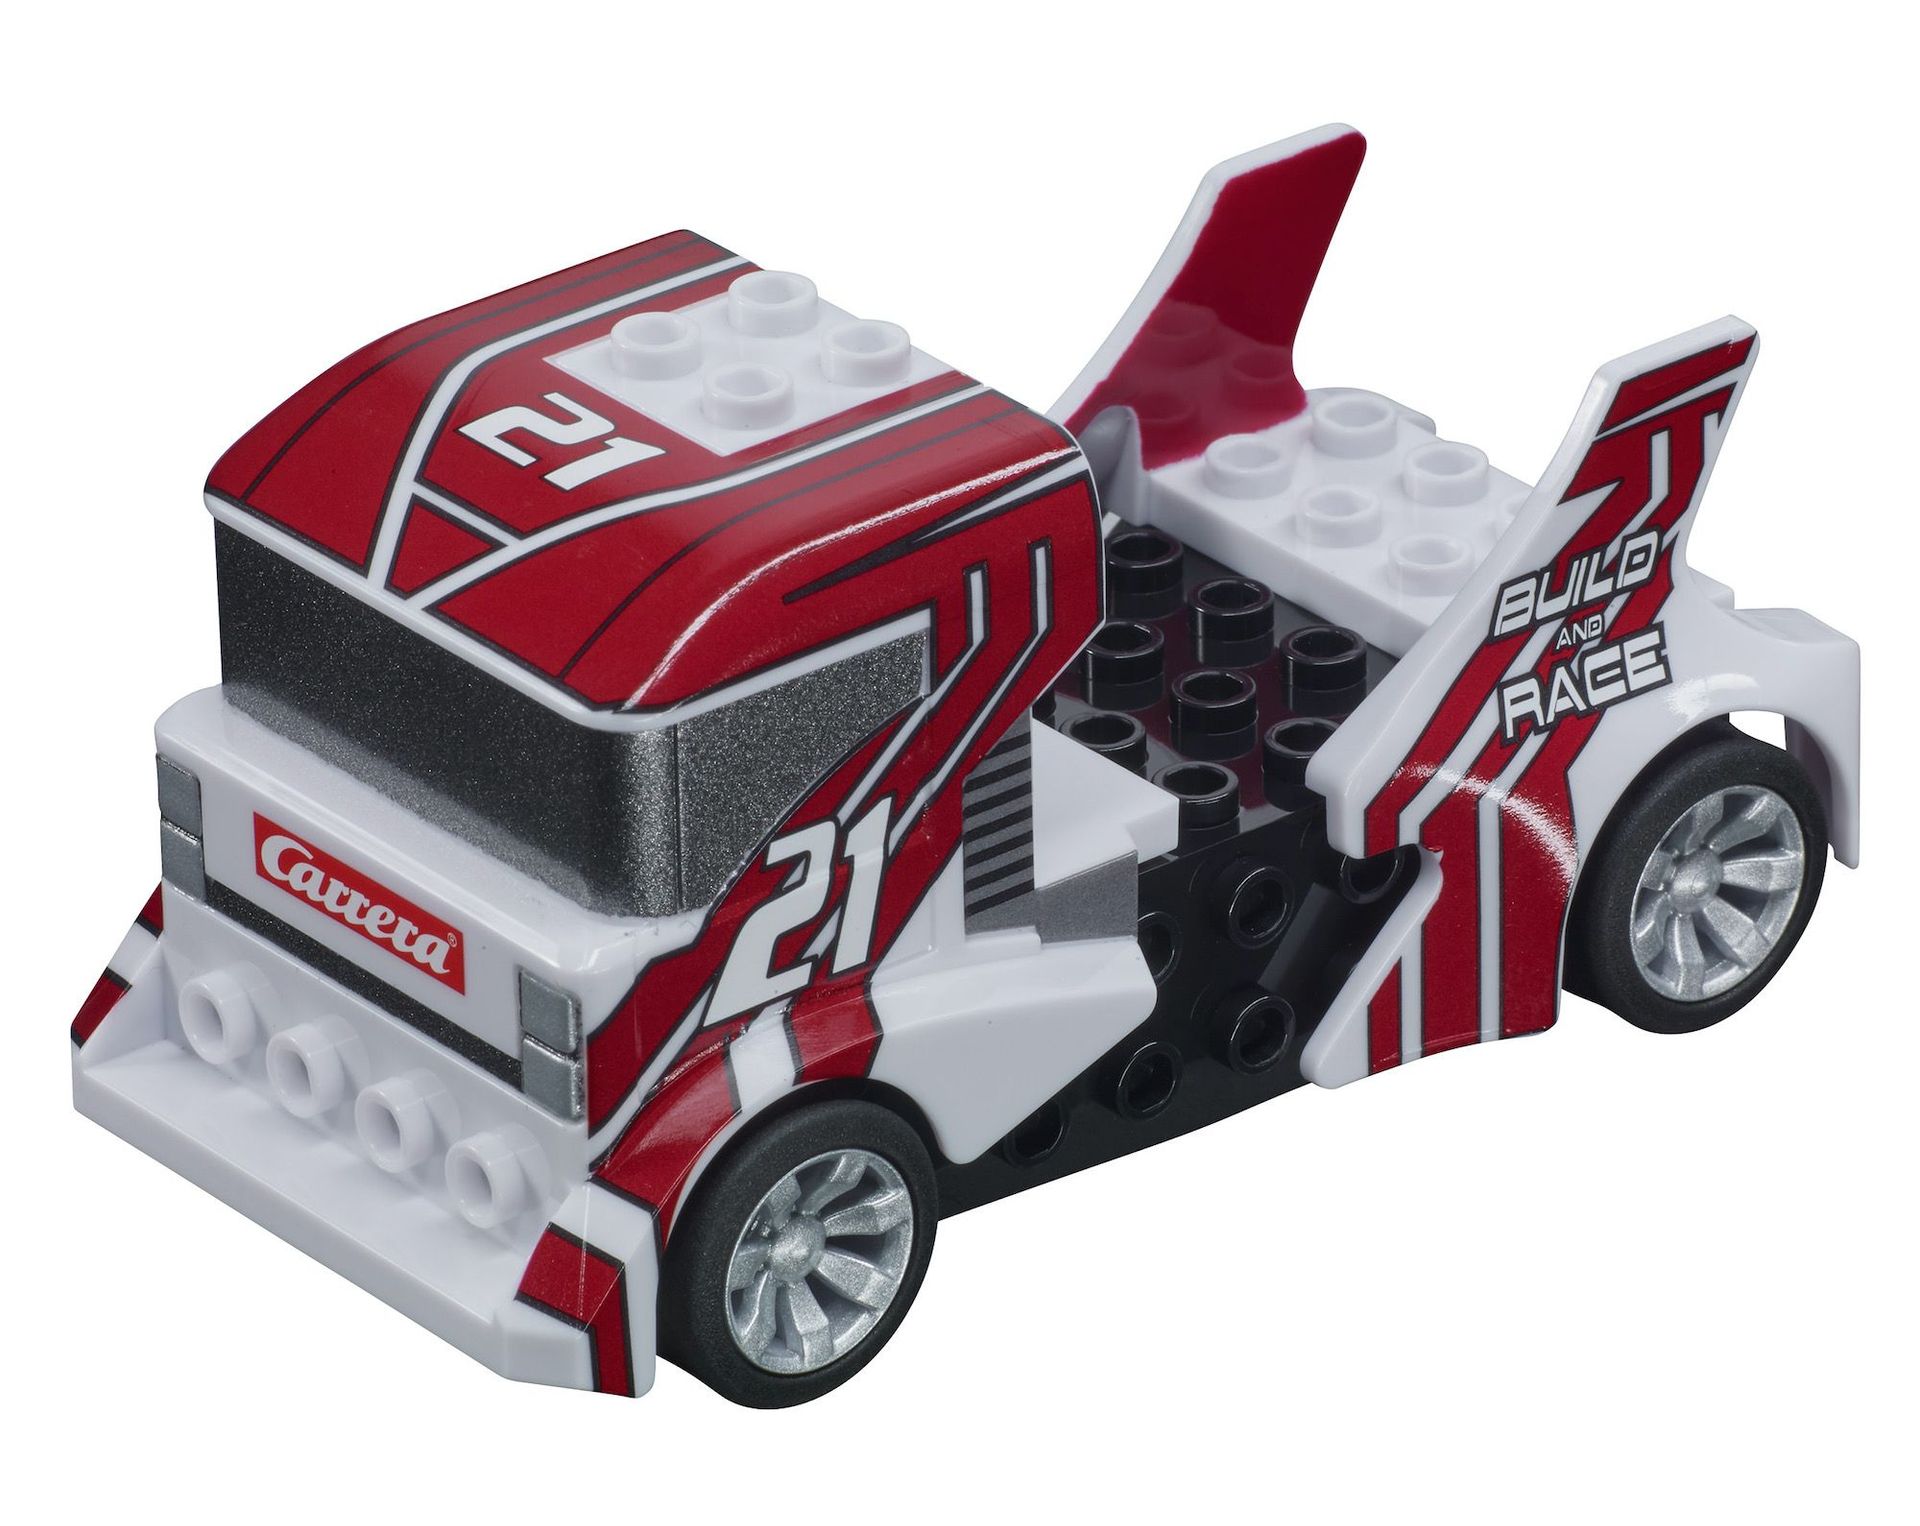 Carrera 64191 - Build n Race - Race Truck white Go!!!